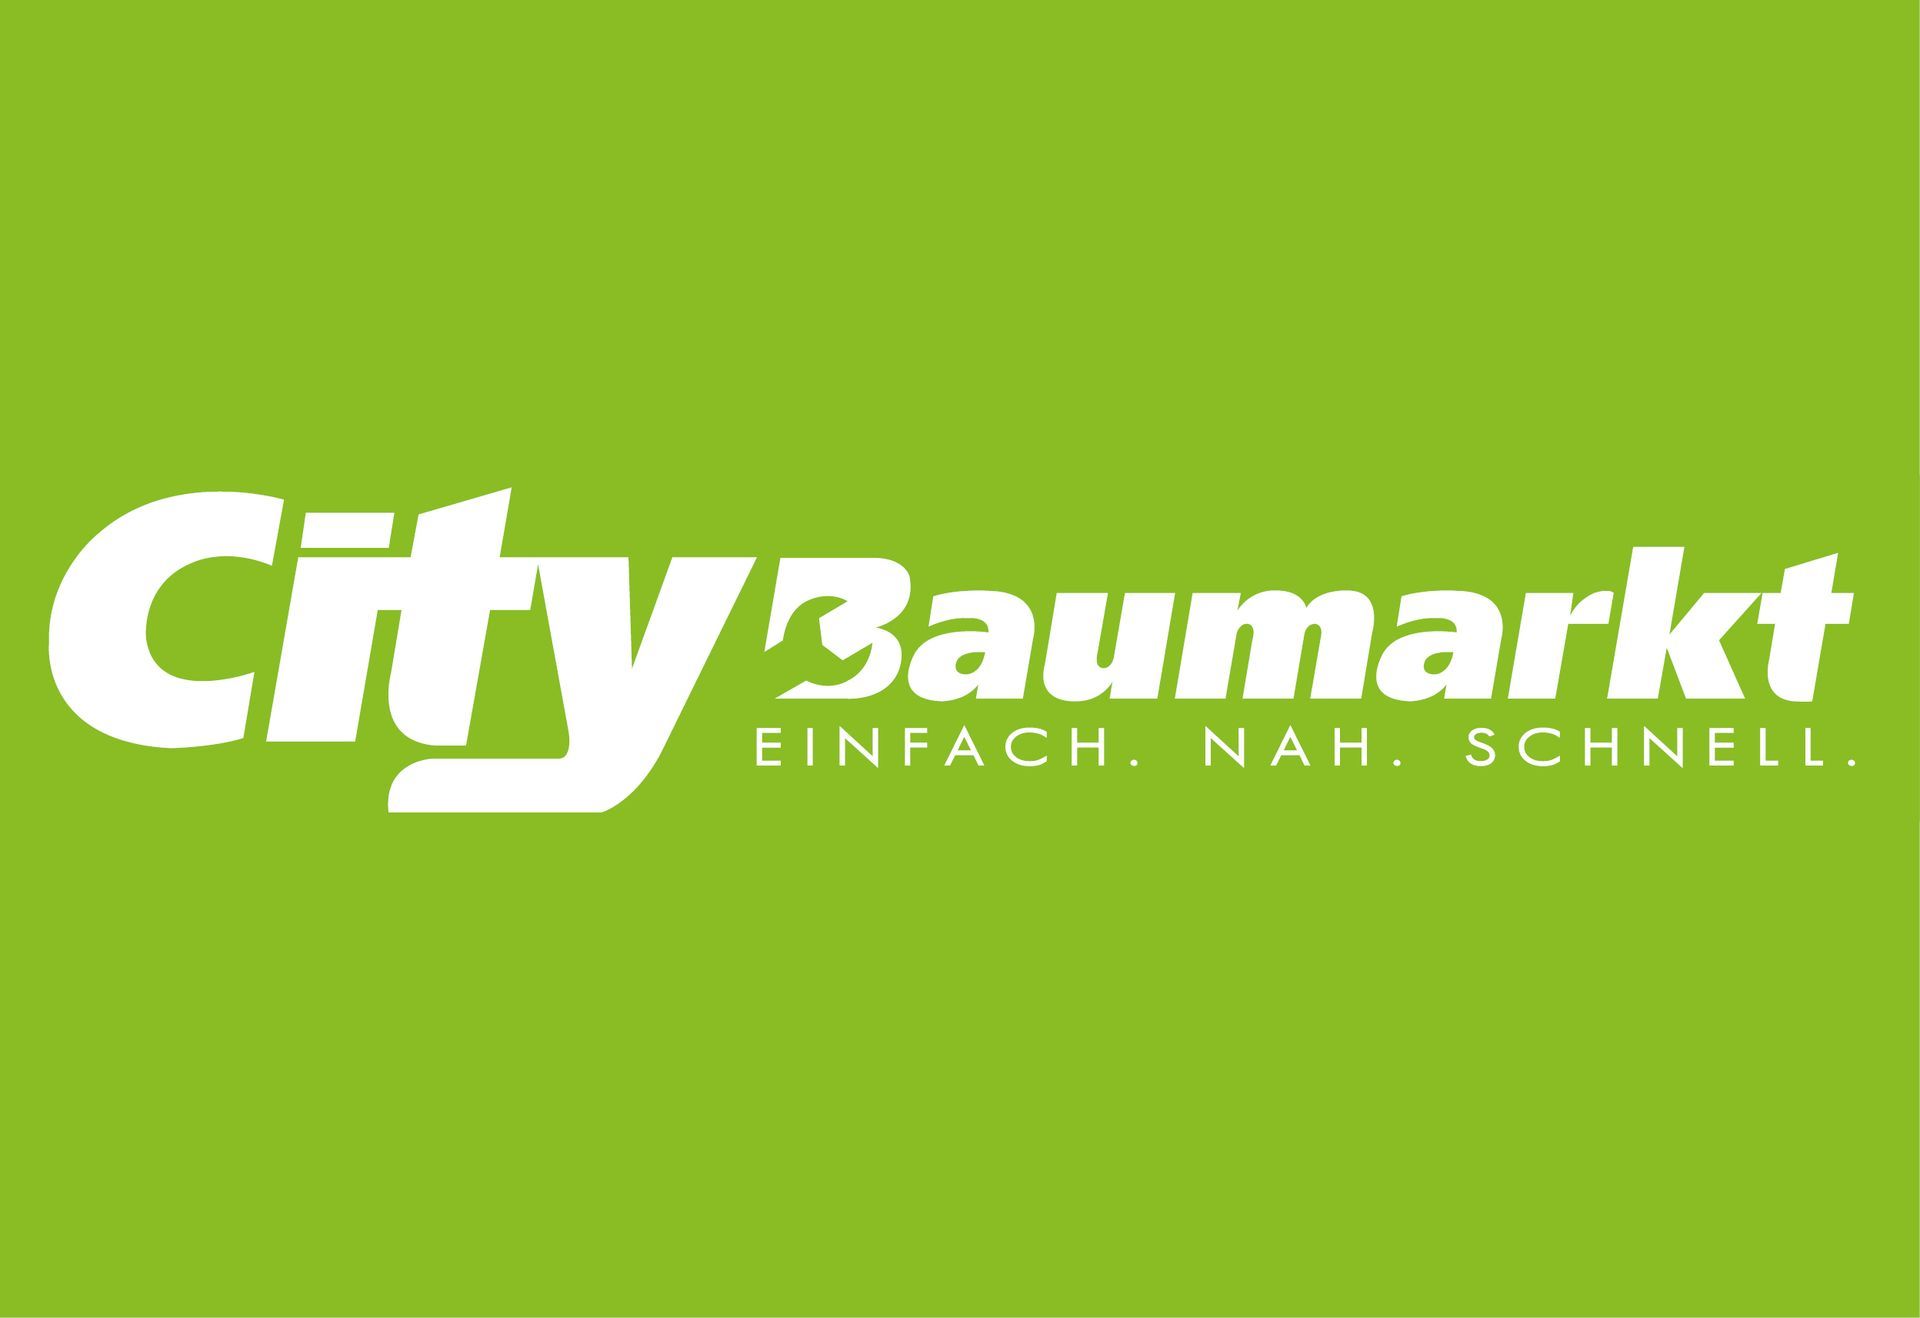 City Baumarkt Logo